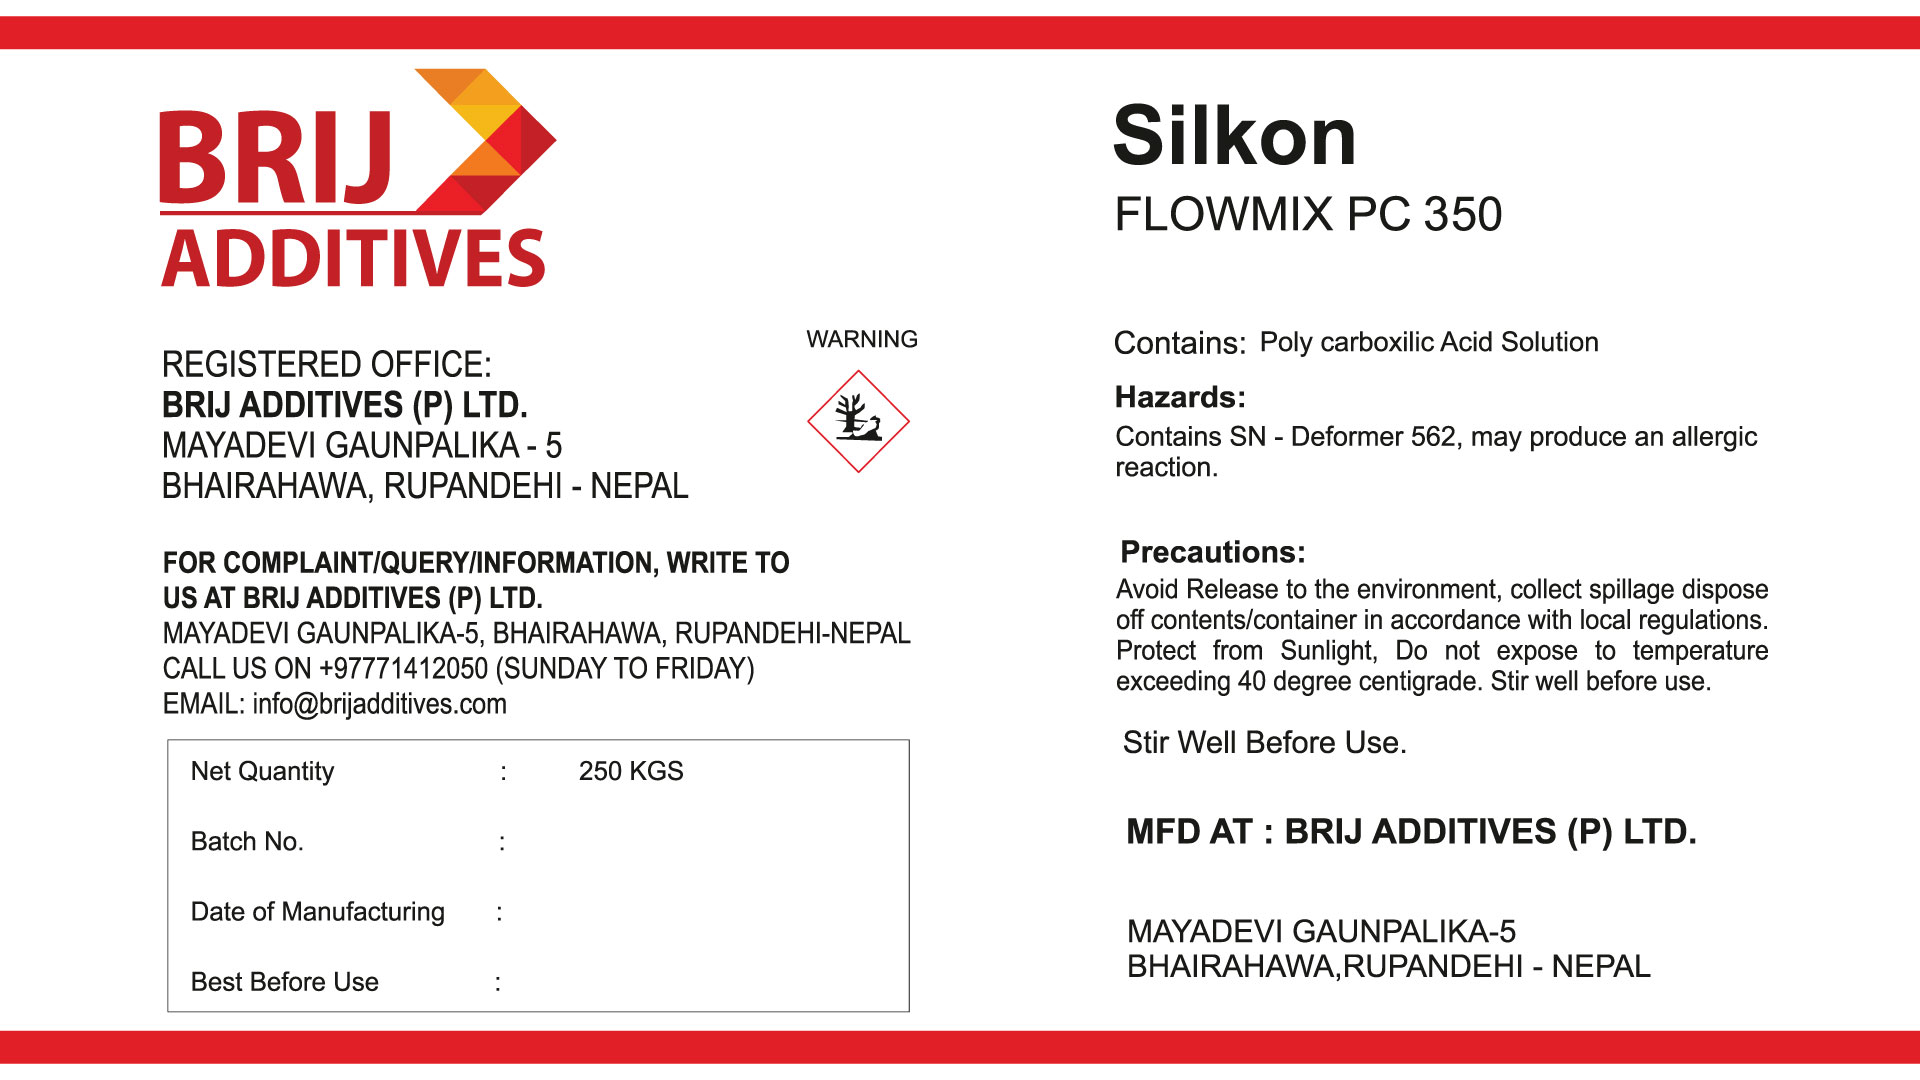 Silkon Flowmix PC 350